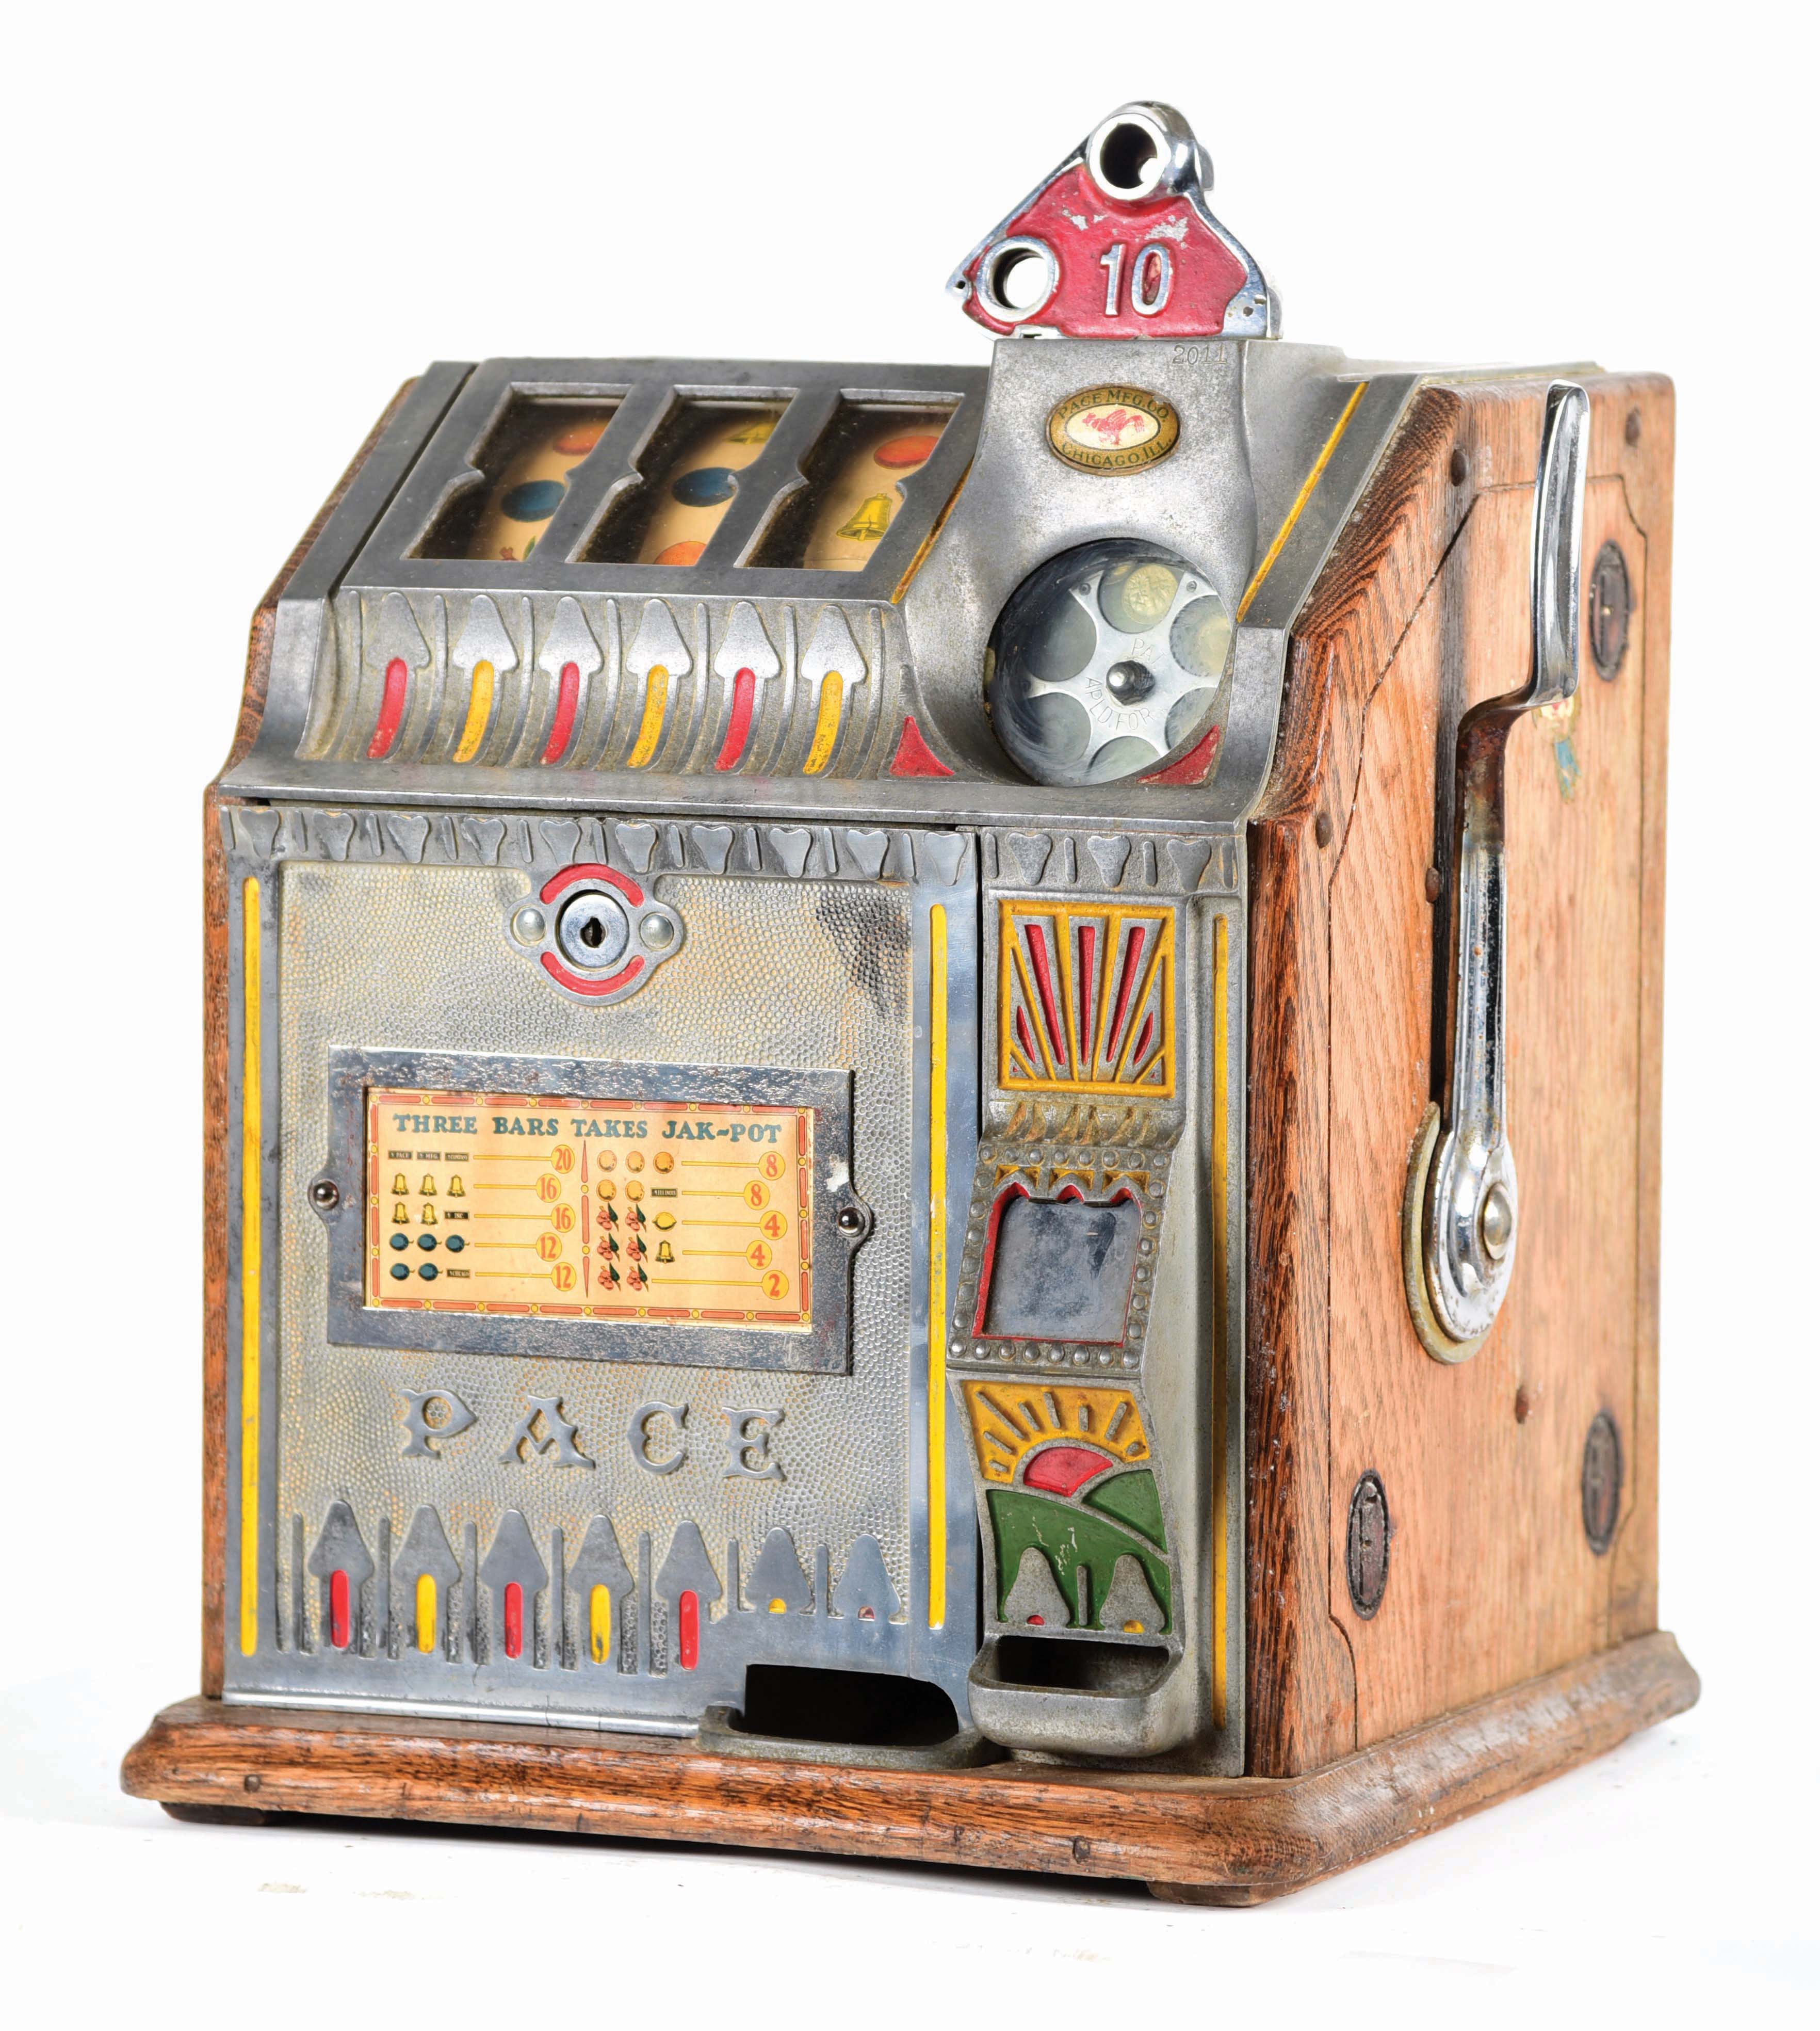 1922 pace phantom slot machine